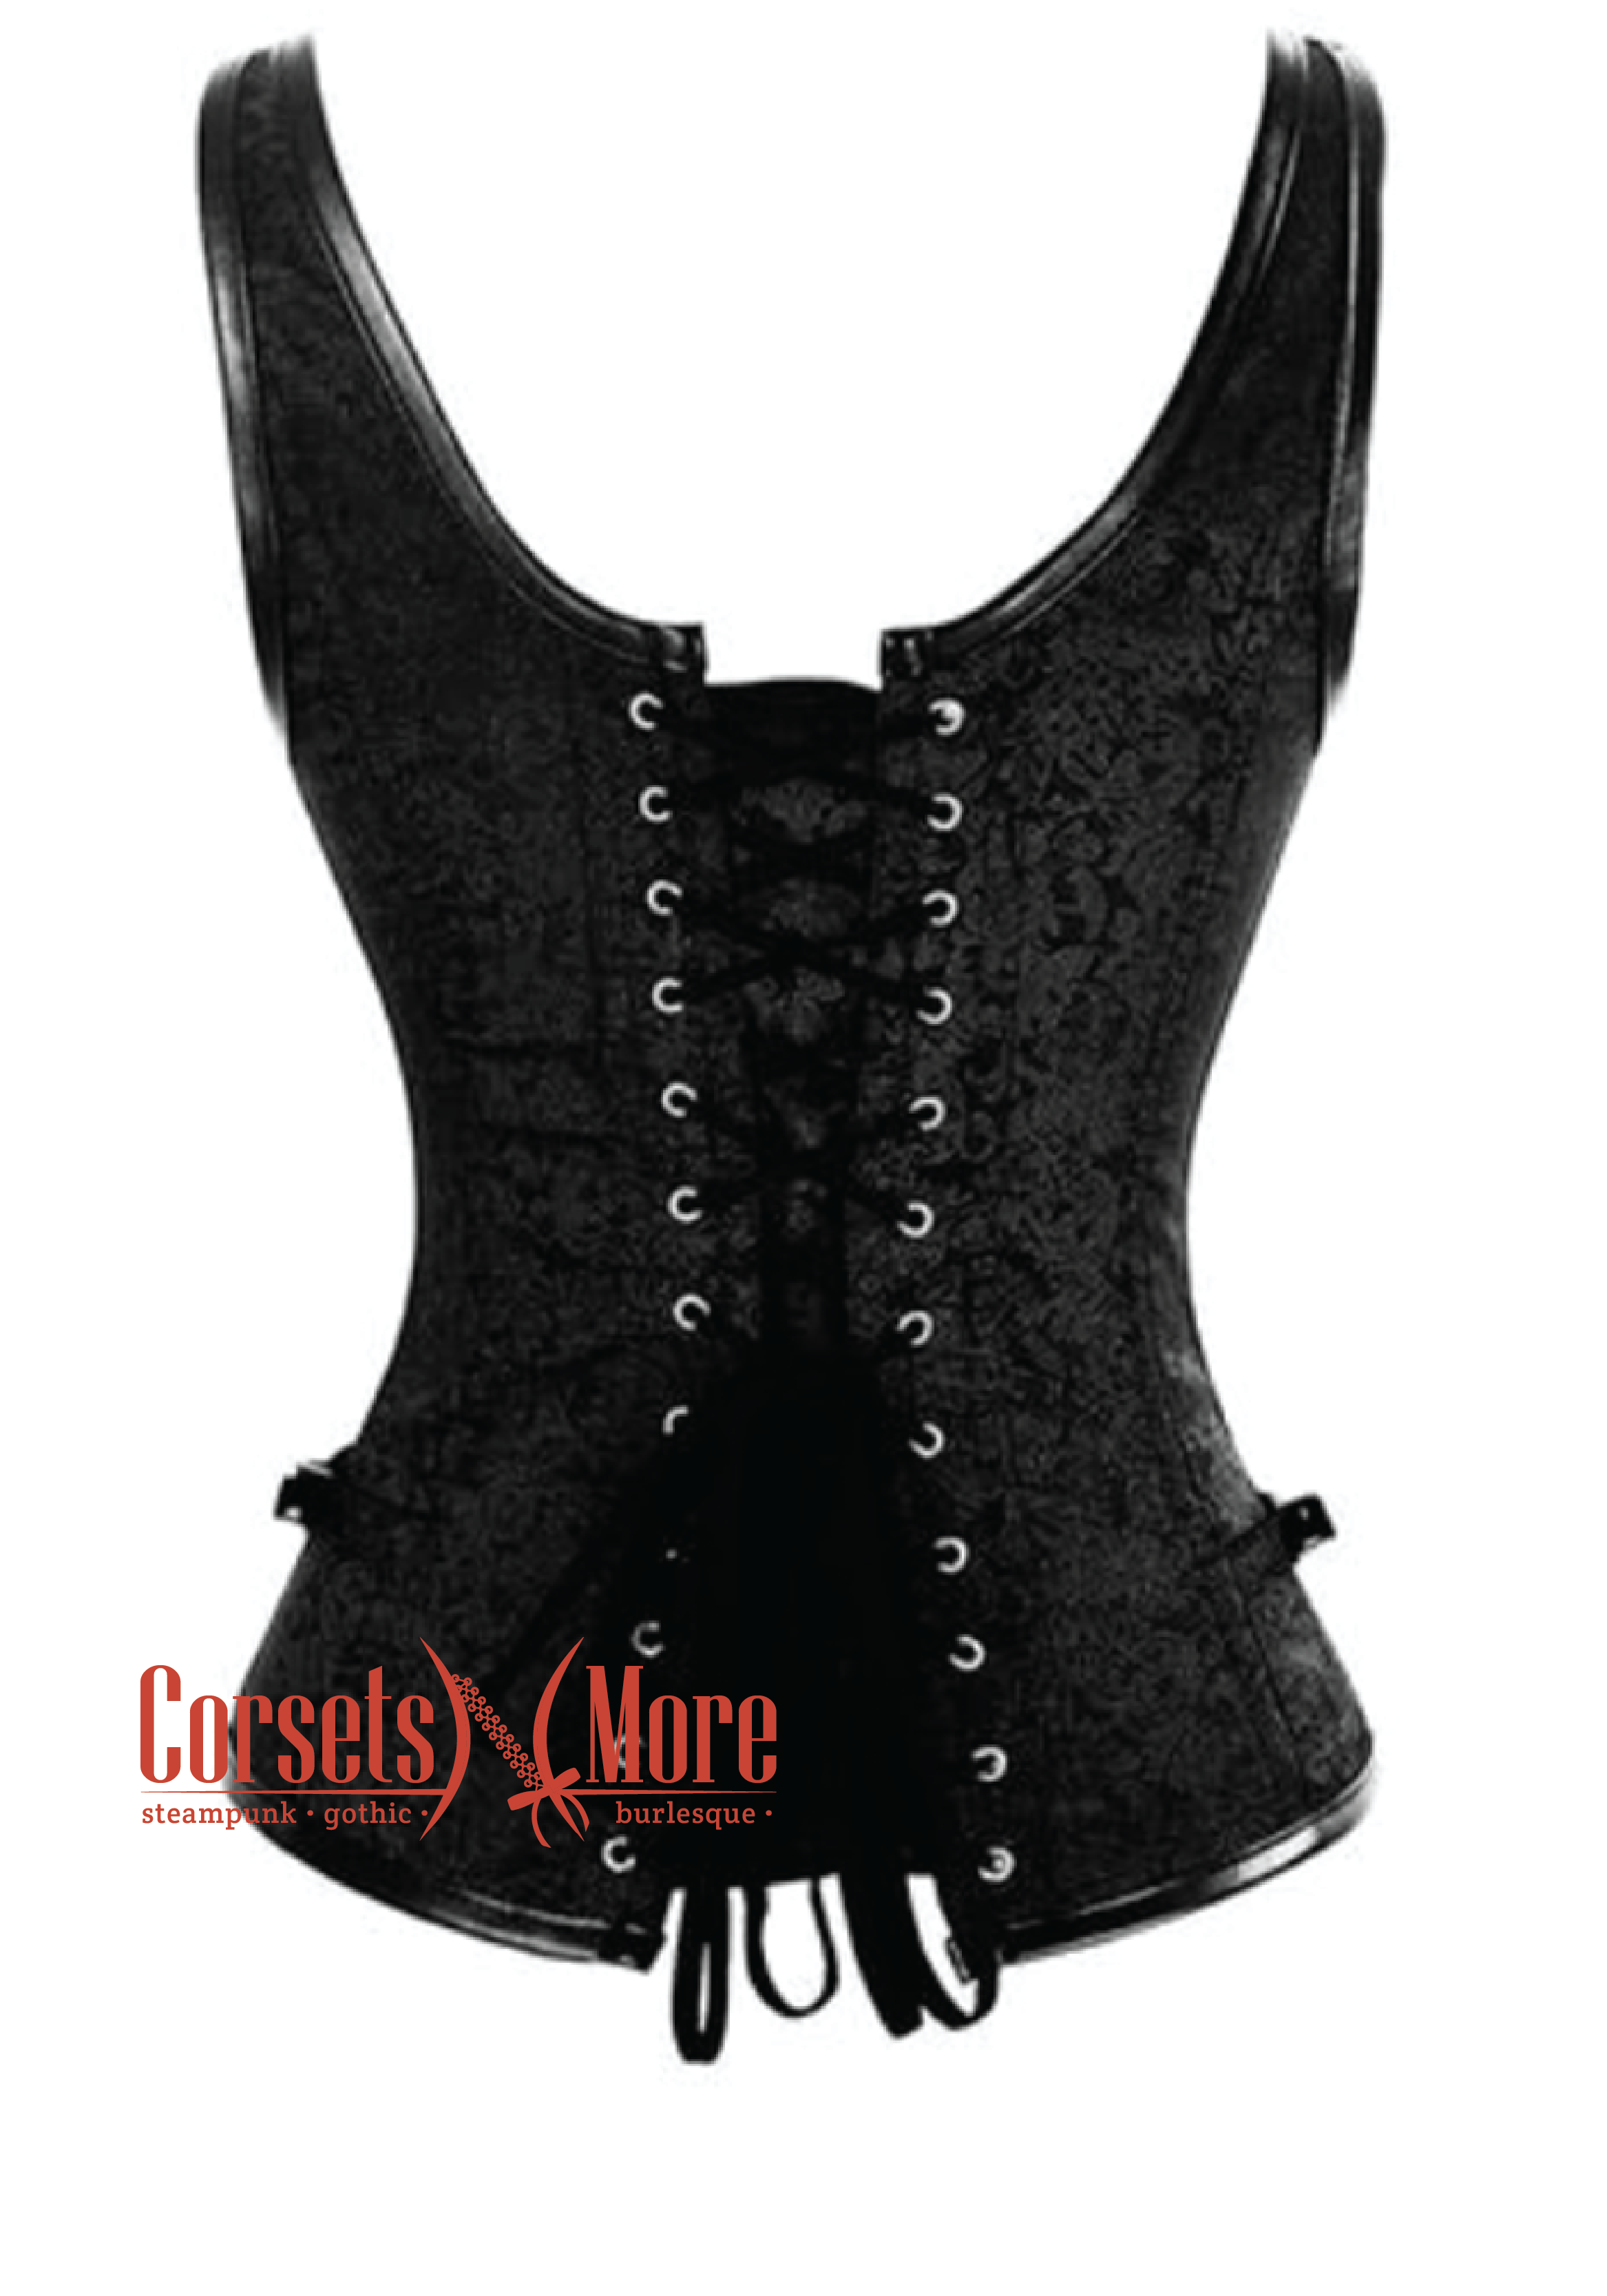 Women Black Steampunk Lace up Gothic Bustier Overbust Corset Waist Top Plus  Size